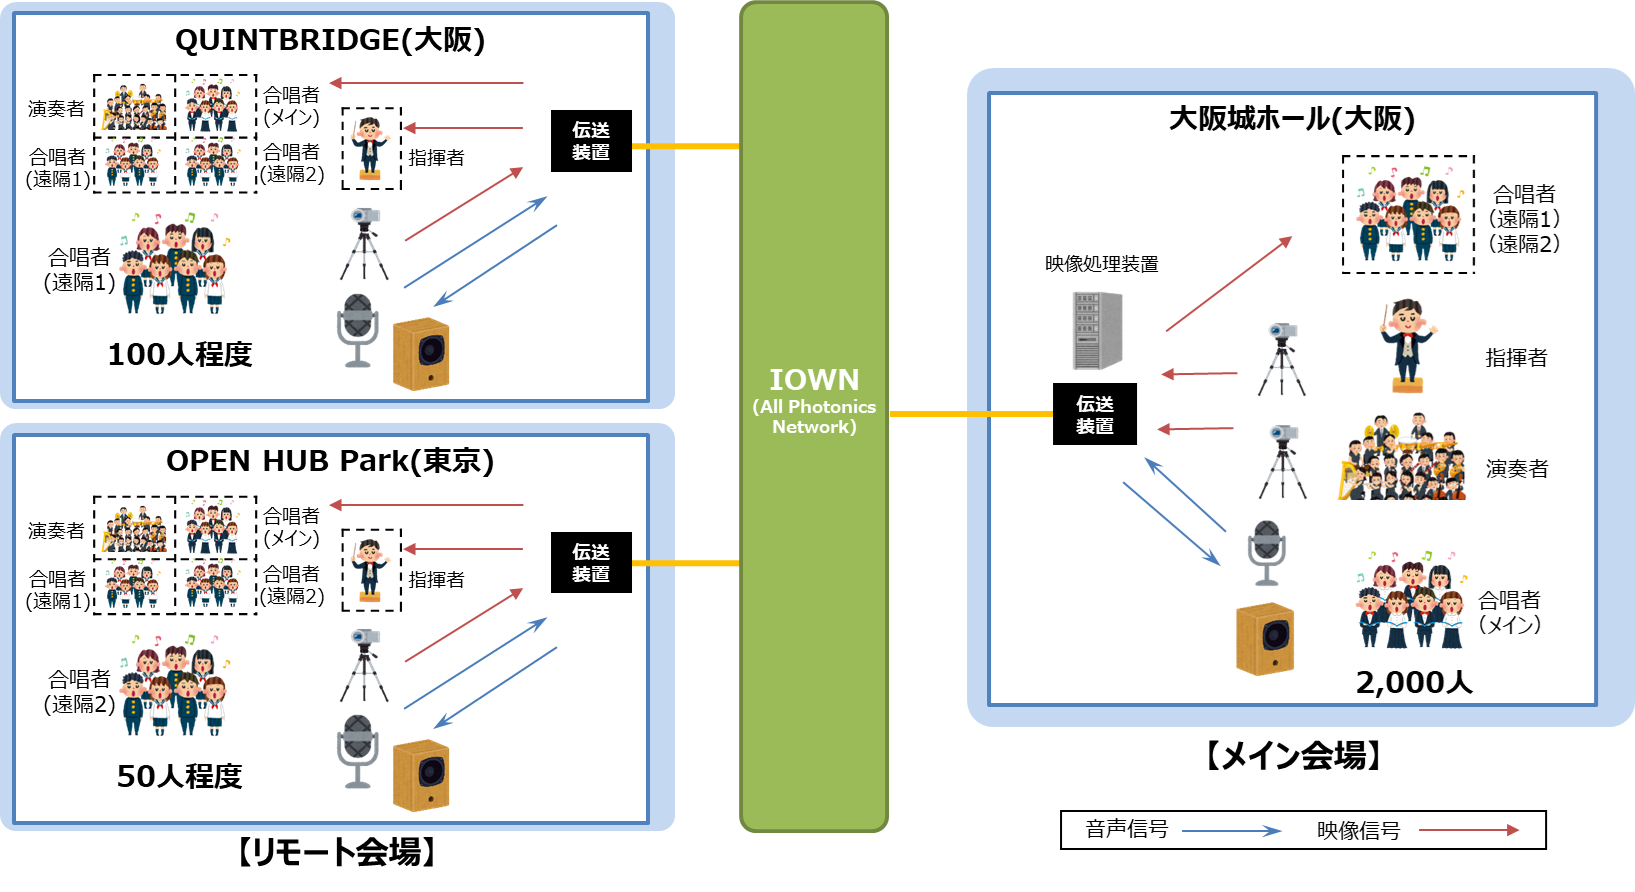 NTT西日本は、IOWN APN実証環境（大阪城ホール・QUINTBRIDGE）、リモート拠点会場（QUINTBRIDGE）の提供、技術検証/評価を、NTT Comは、IOWN APN実証環境（OPEN HUB Park）、リモート拠点会場（OPEN HUB Park）の提供を担当